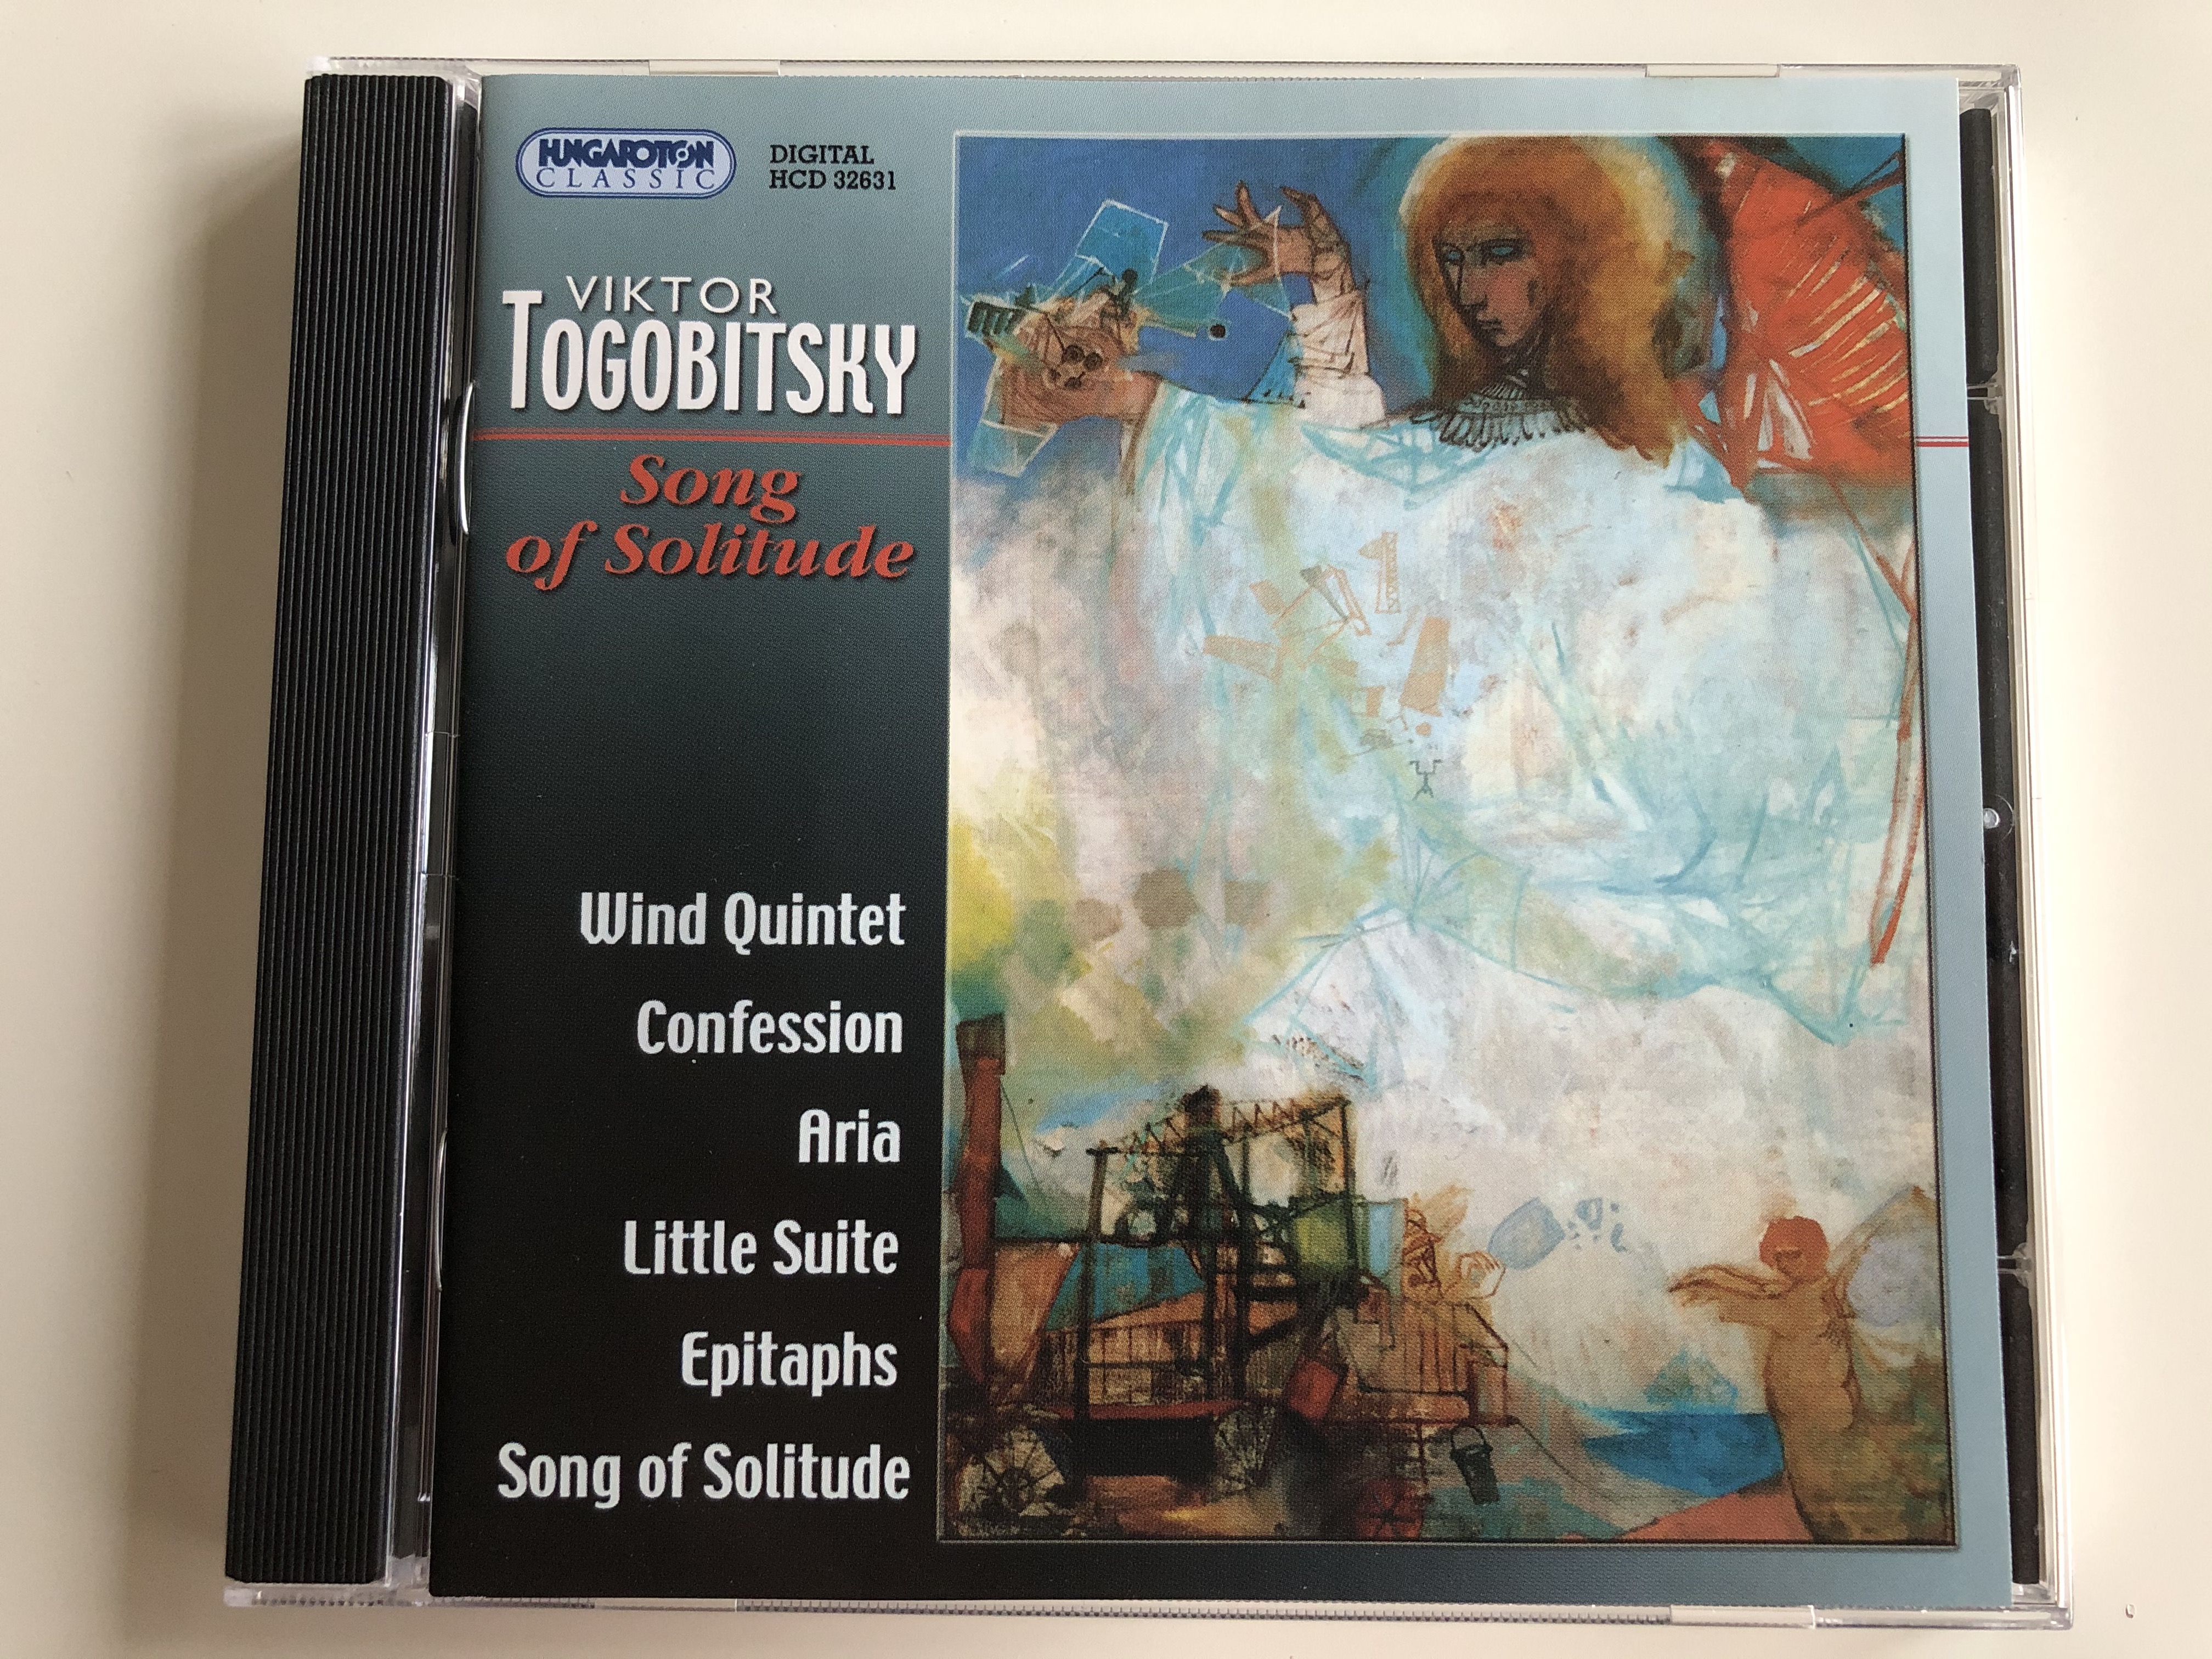 viktor-togobitsky-song-of-solitude-wind-quintet-confession-aria-little-suite-epitaphs-song-of-solitude-hungaroton-classic-audio-cd-2009-stereo-hcd-32631-1-.jpg